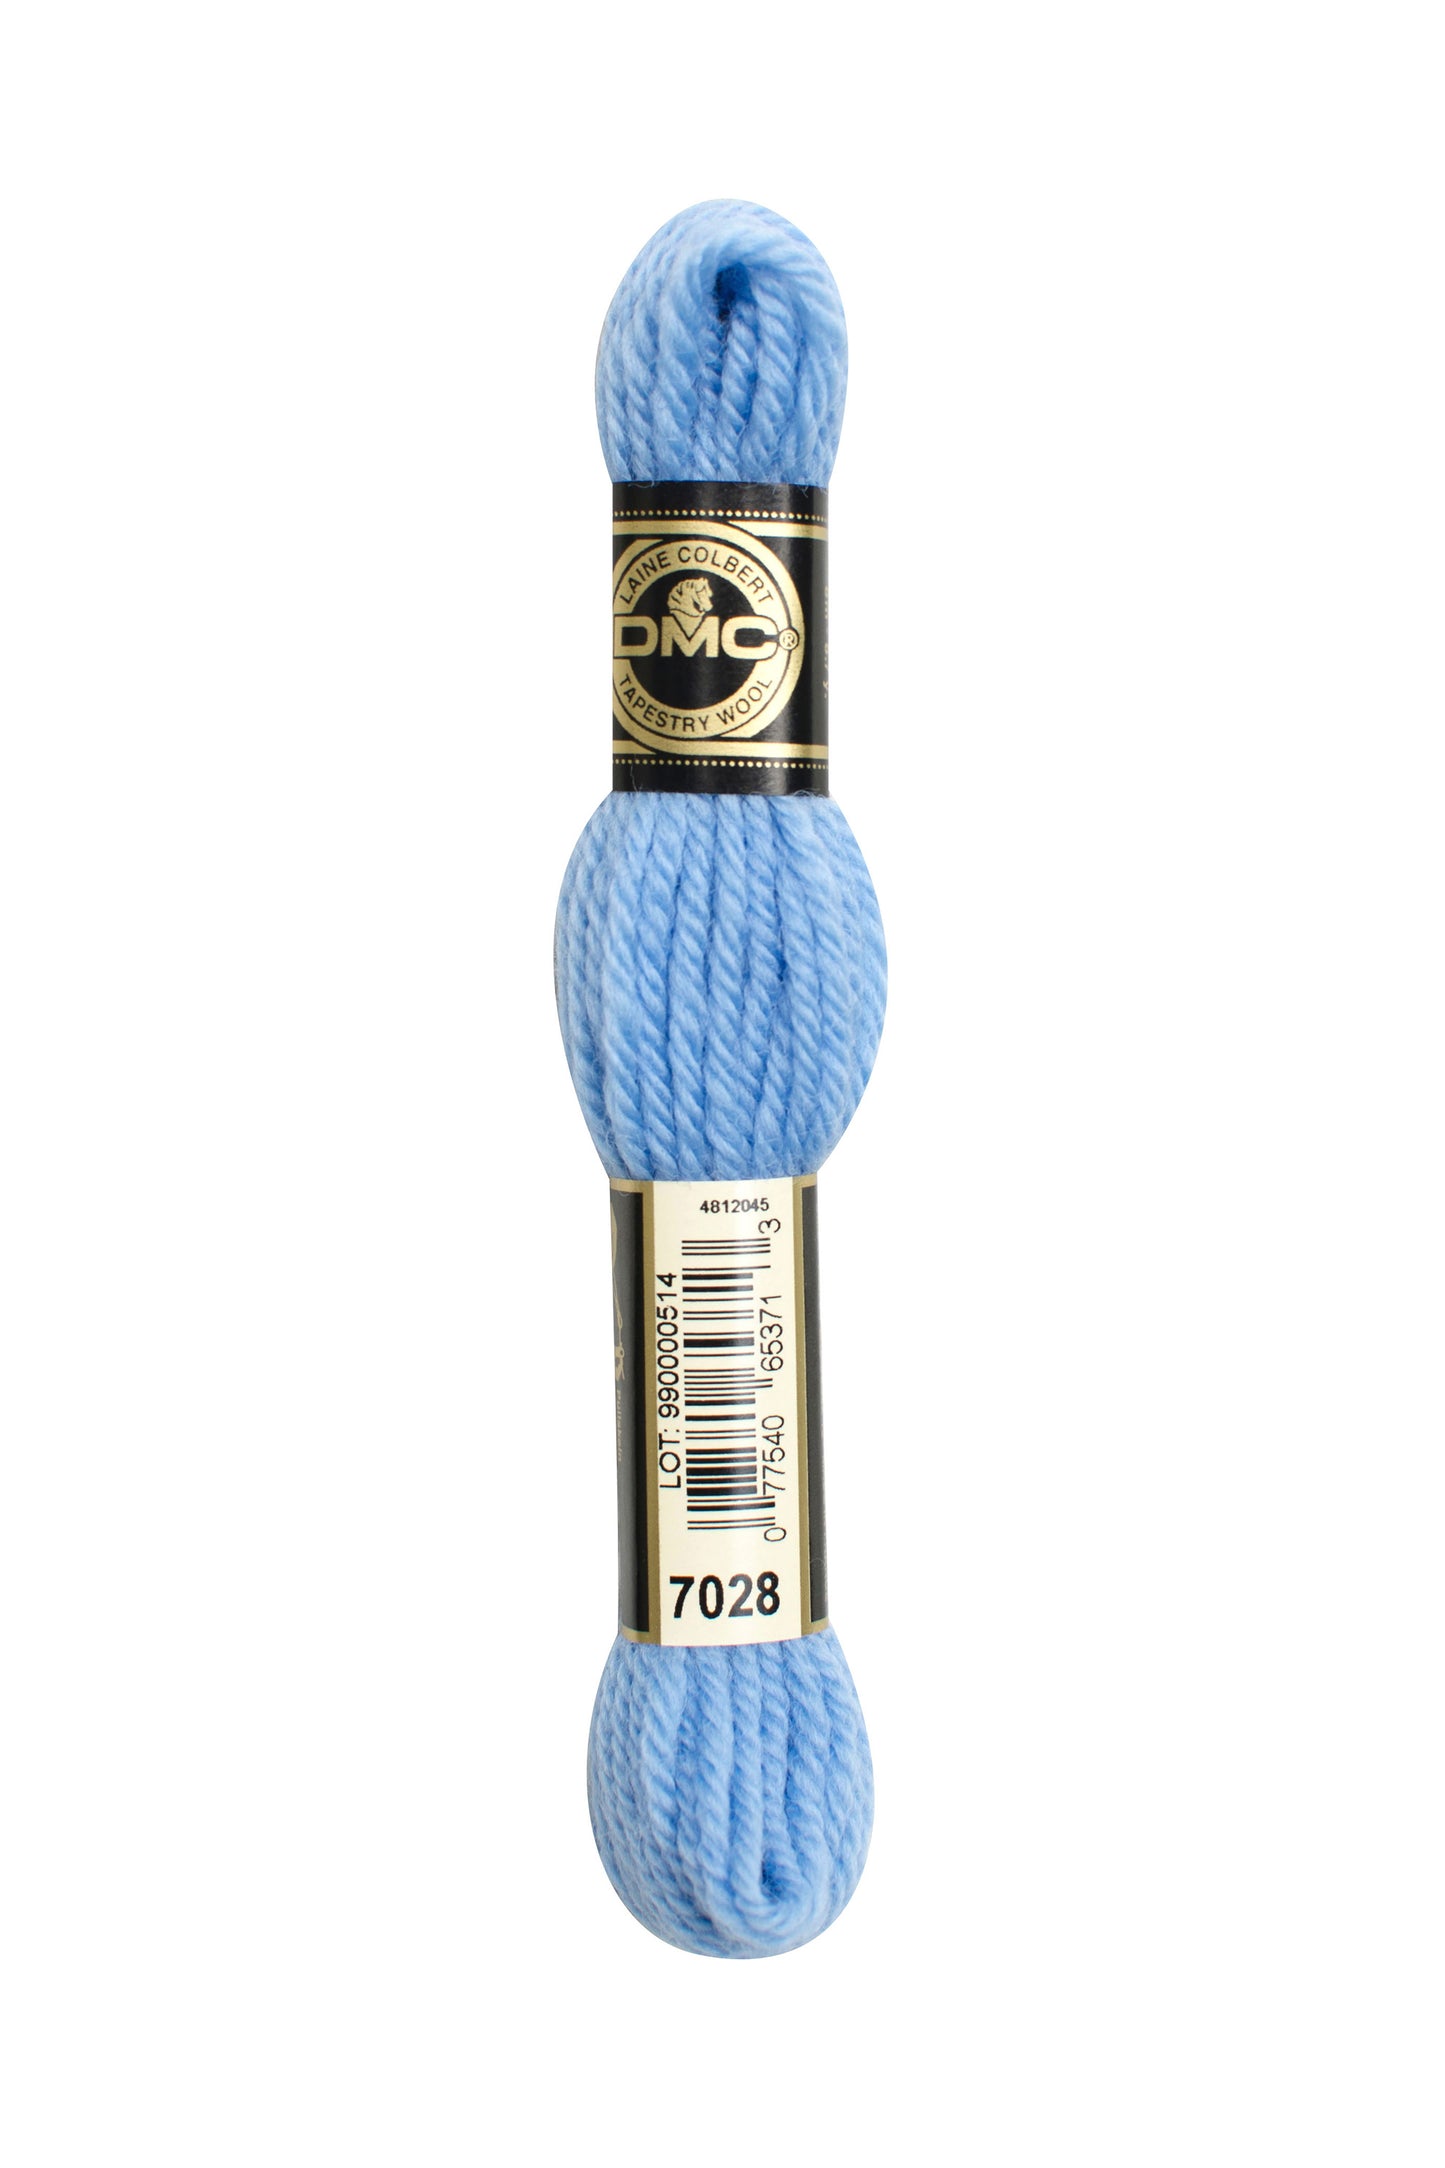 7031 – DMC Tapestry Wool